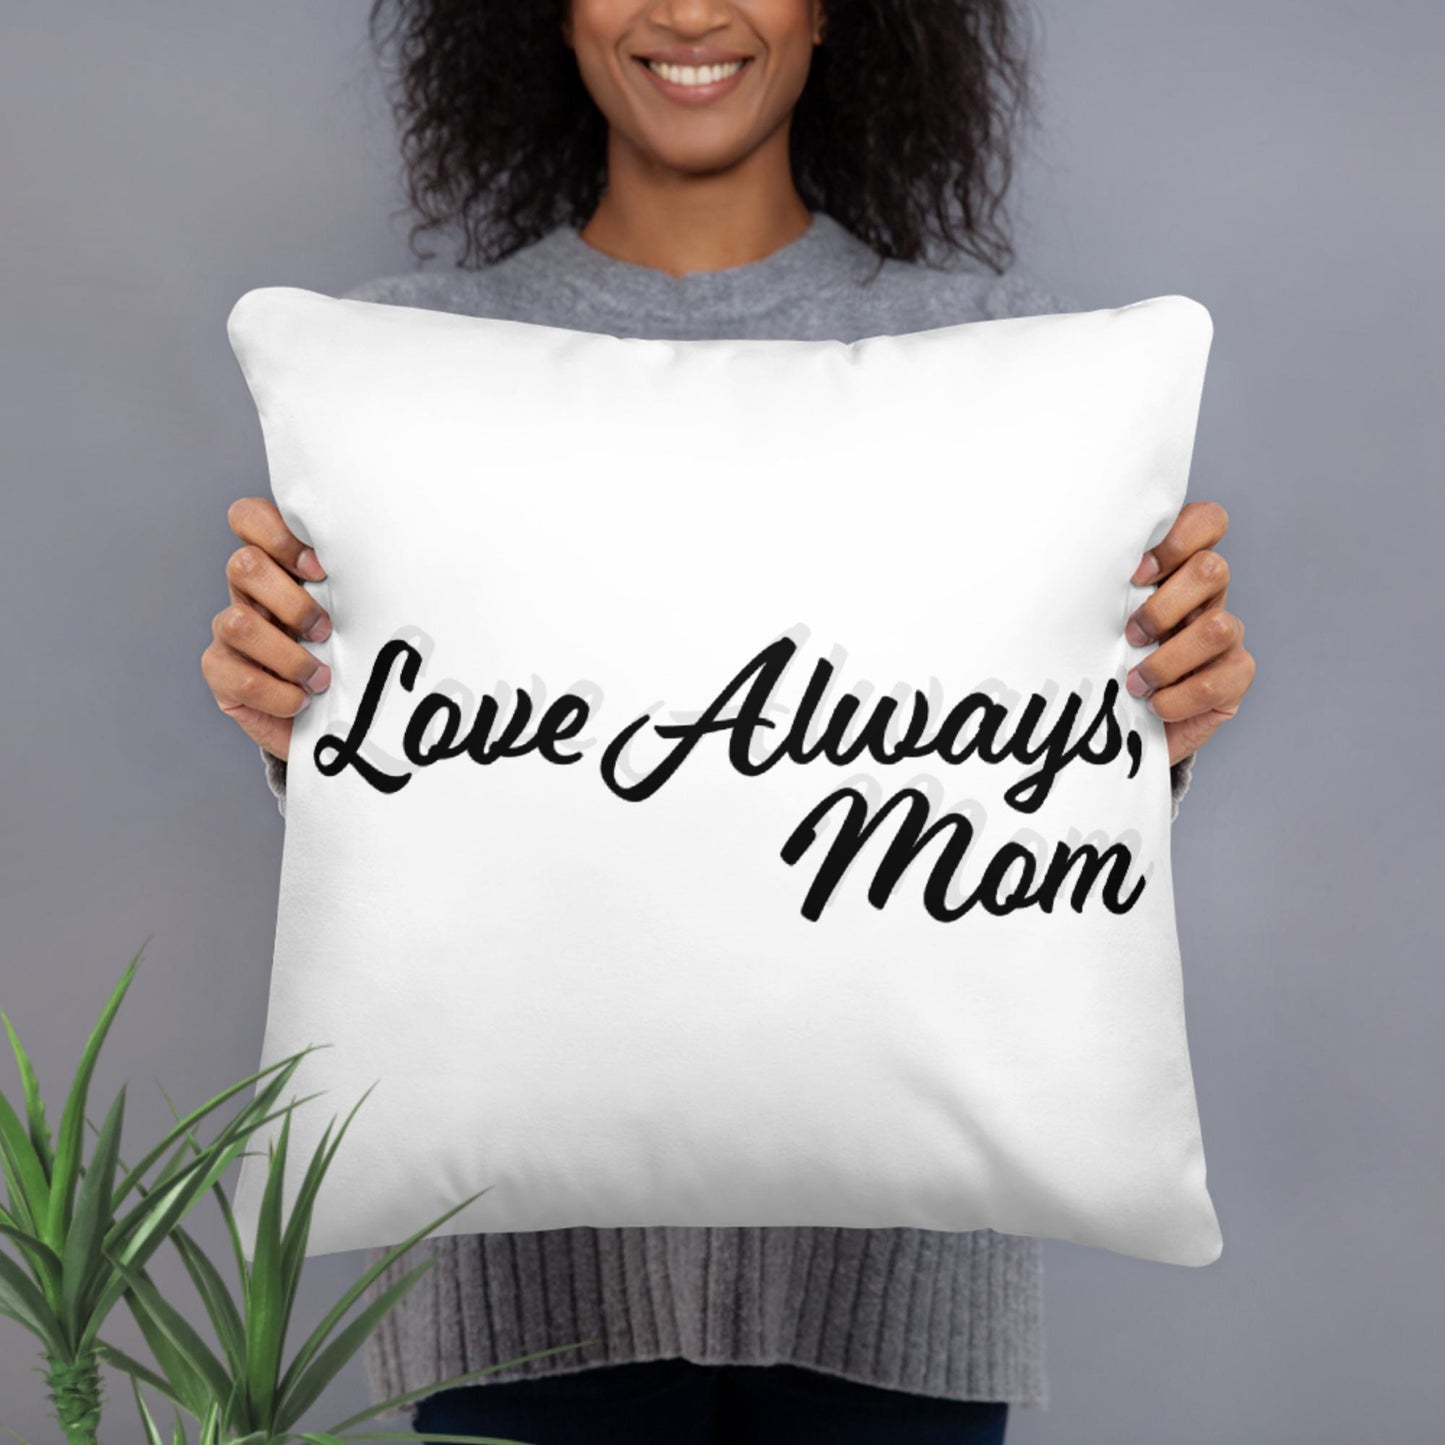 Cuddle Me Mom Pillow